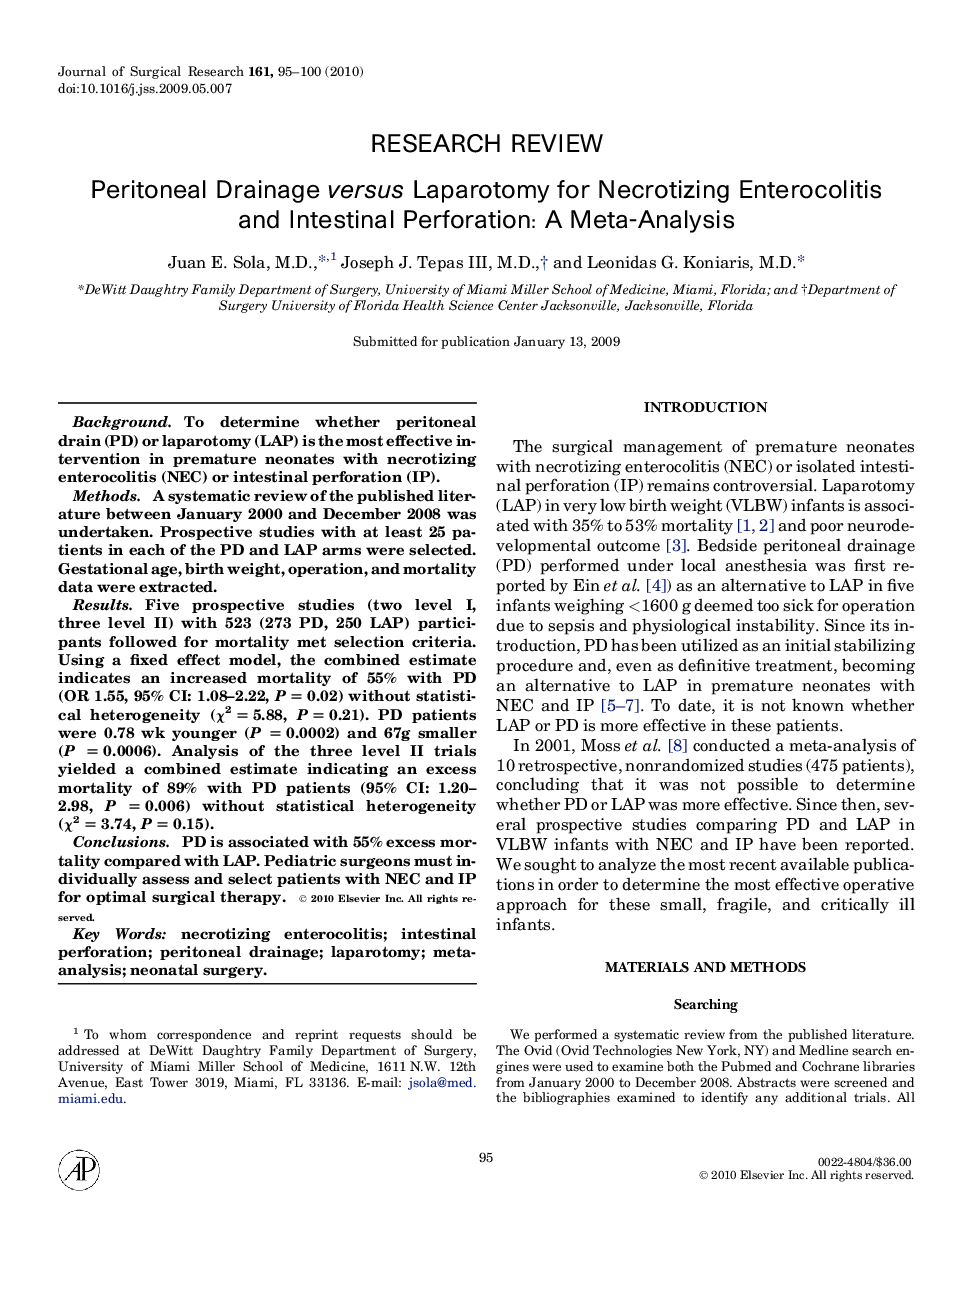 Peritoneal Drainage versus Laparotomy for Necrotizing Enterocolitis and Intestinal Perforation: A Meta-Analysis